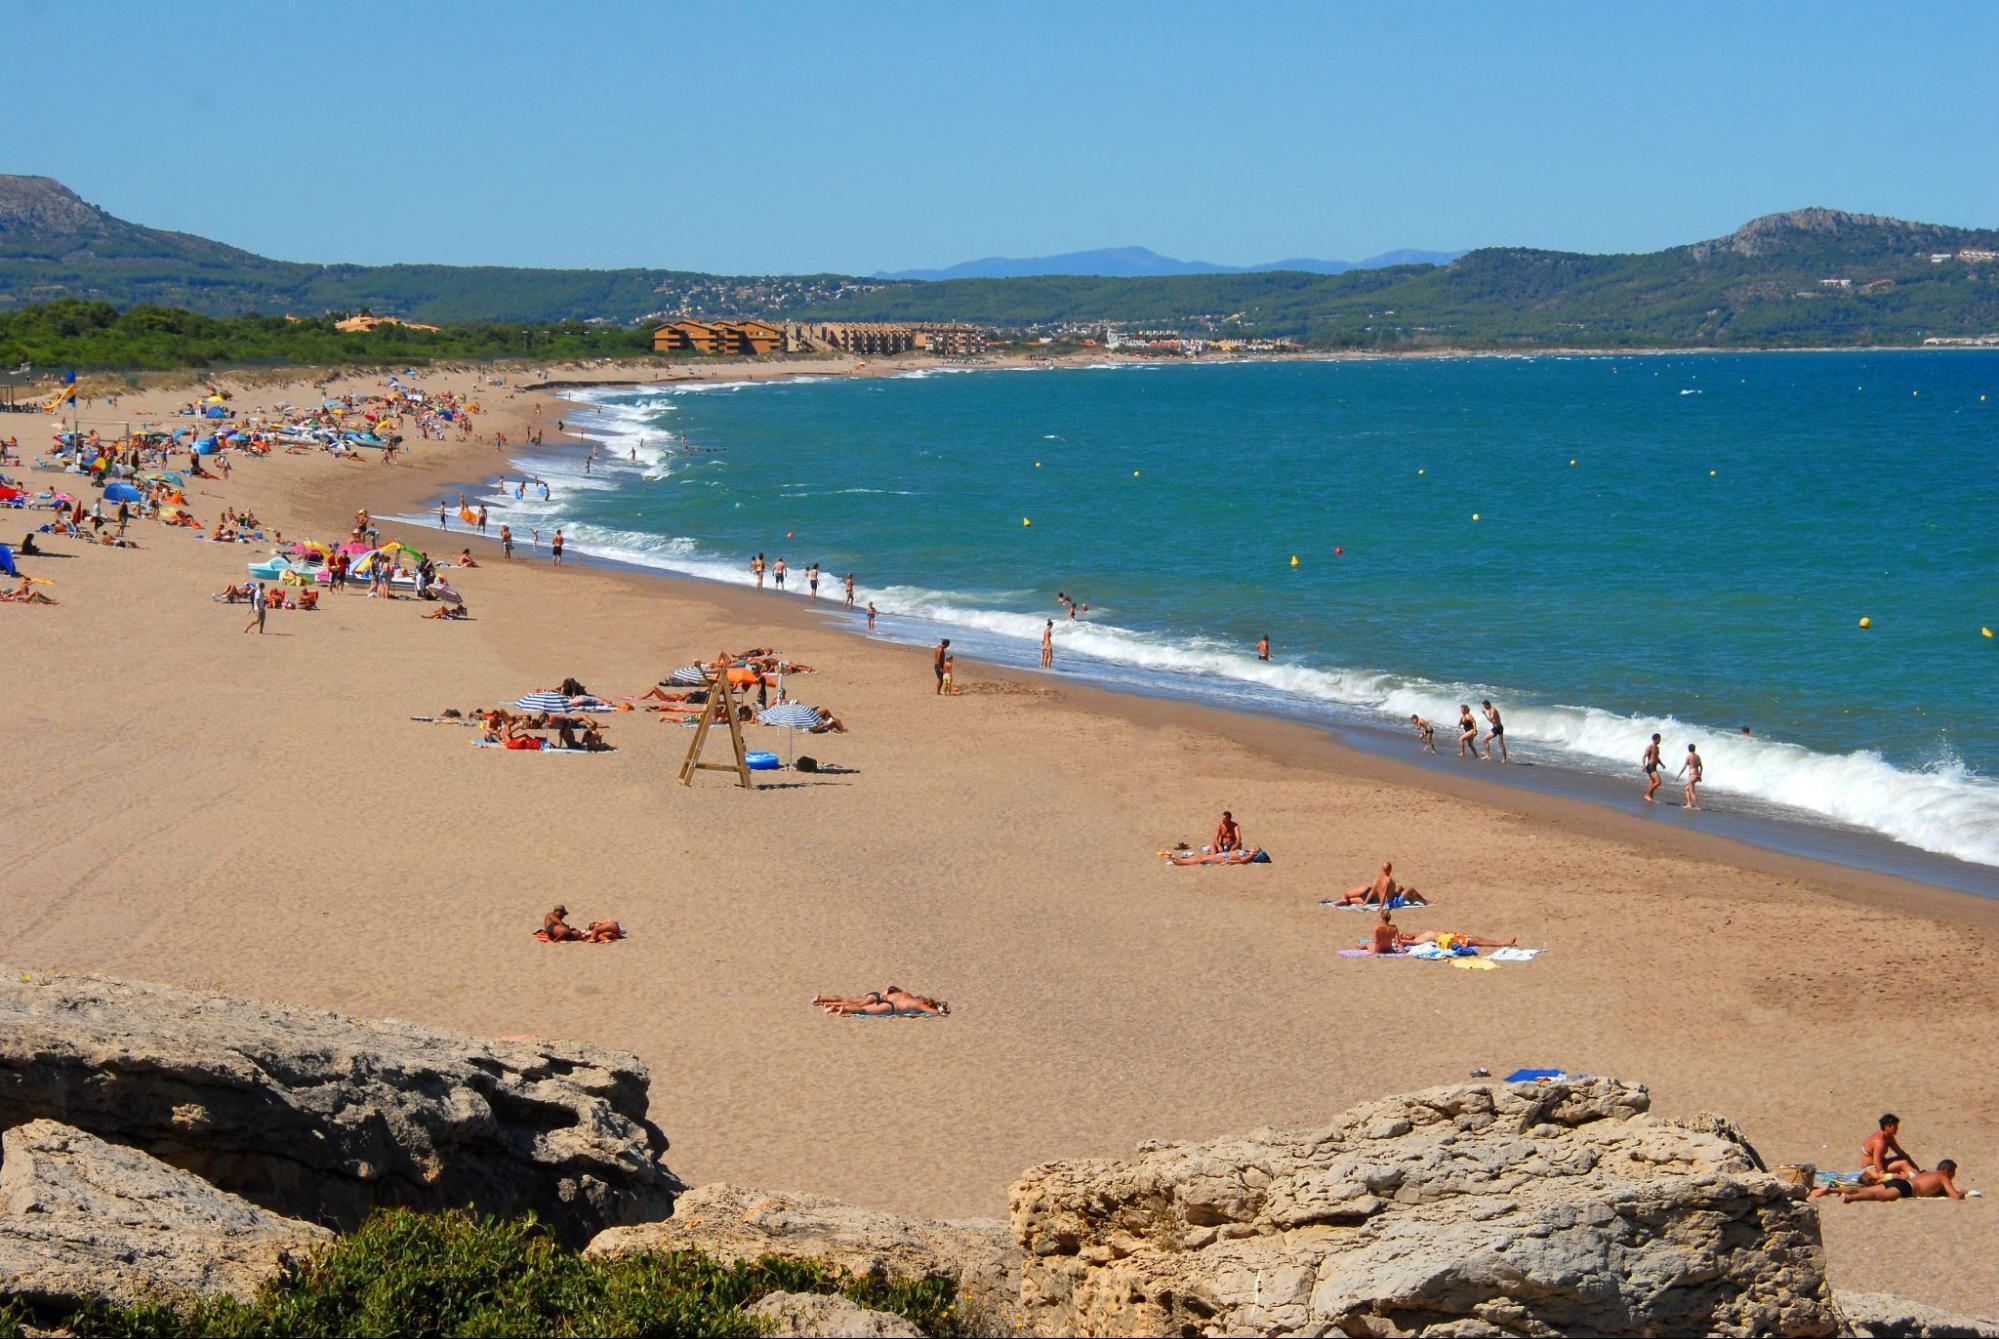 The beach of Platja d’Aro, Spain